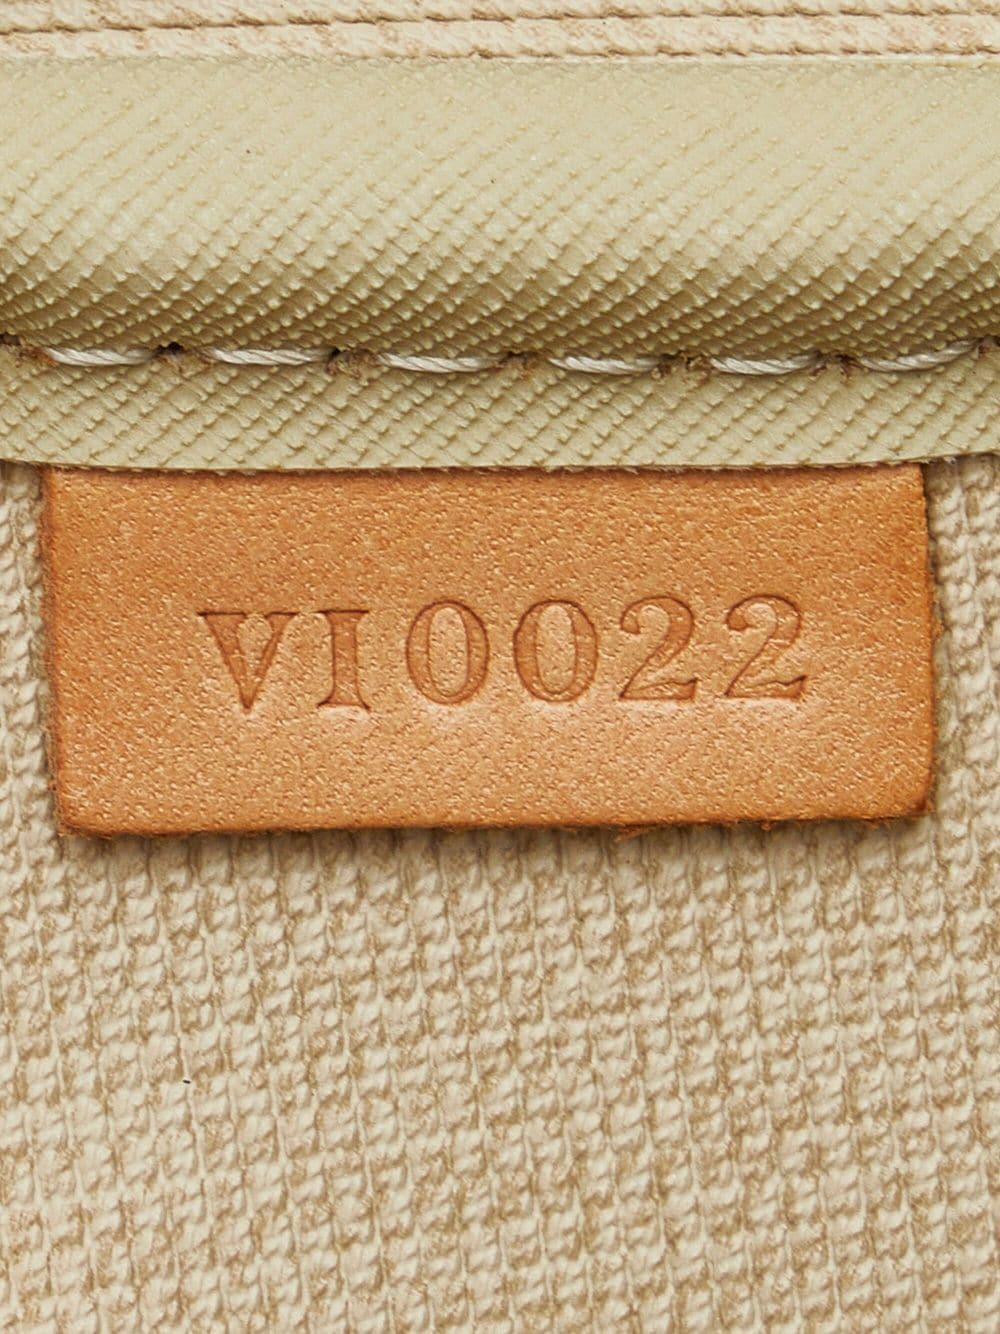 Vintage Louis Vuitton Alize 24H Travel Bag with Padlocks - Luggage